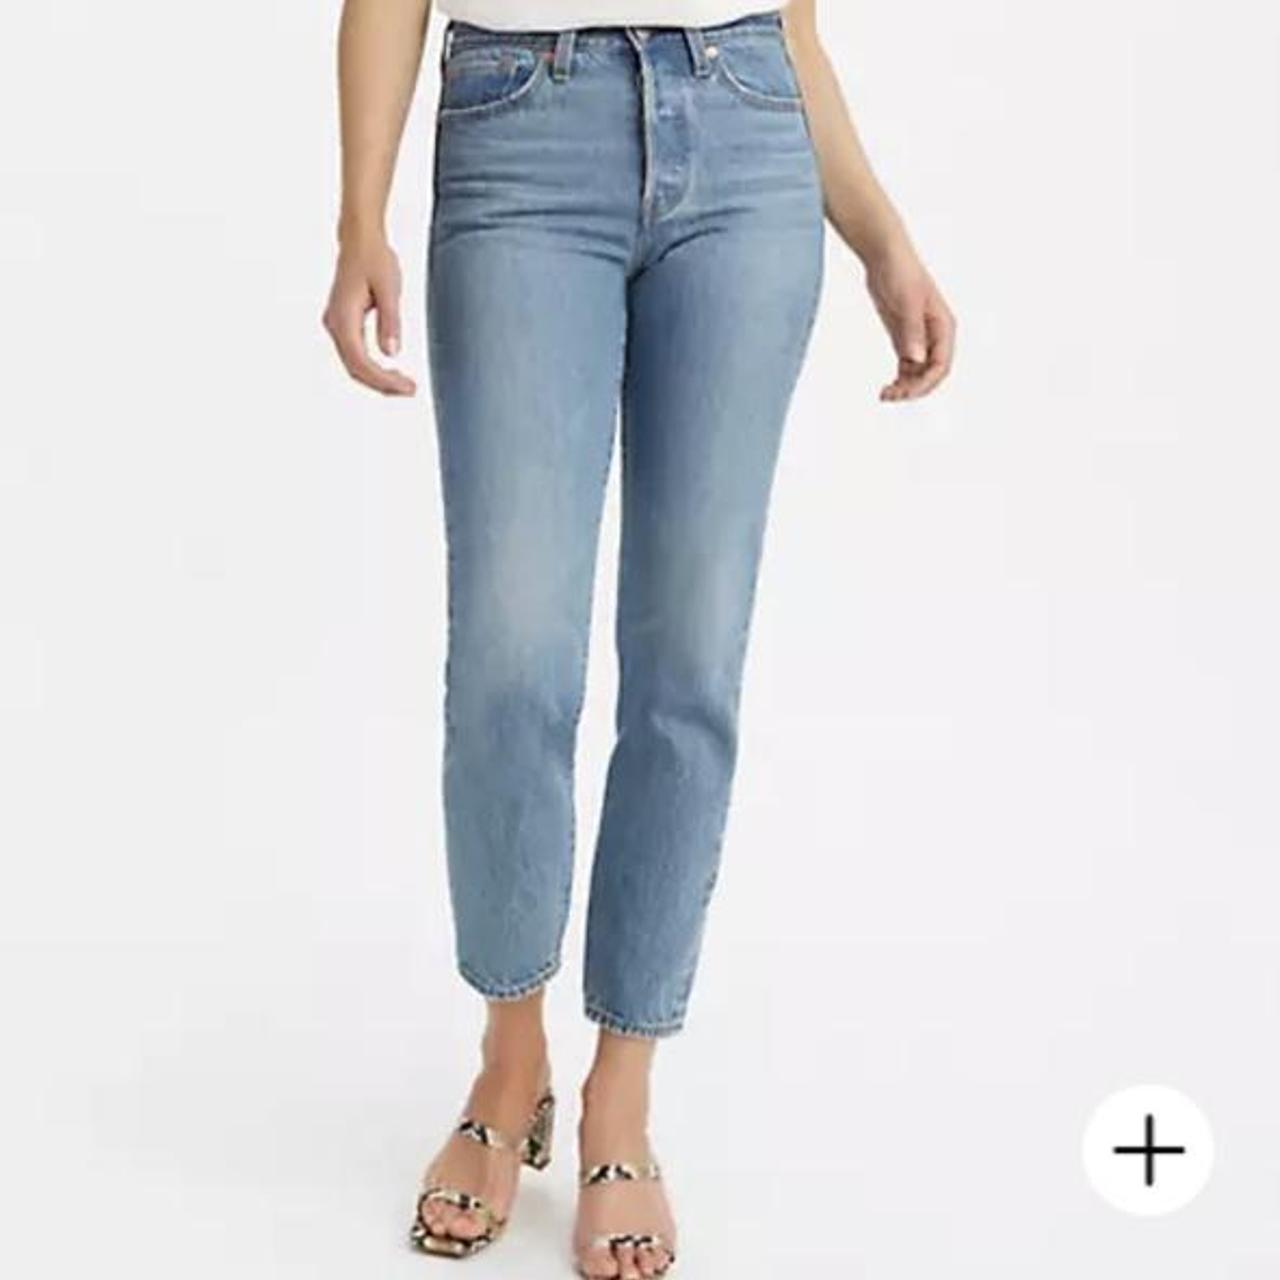 Wedgie Fit Women's Jeans - Grey